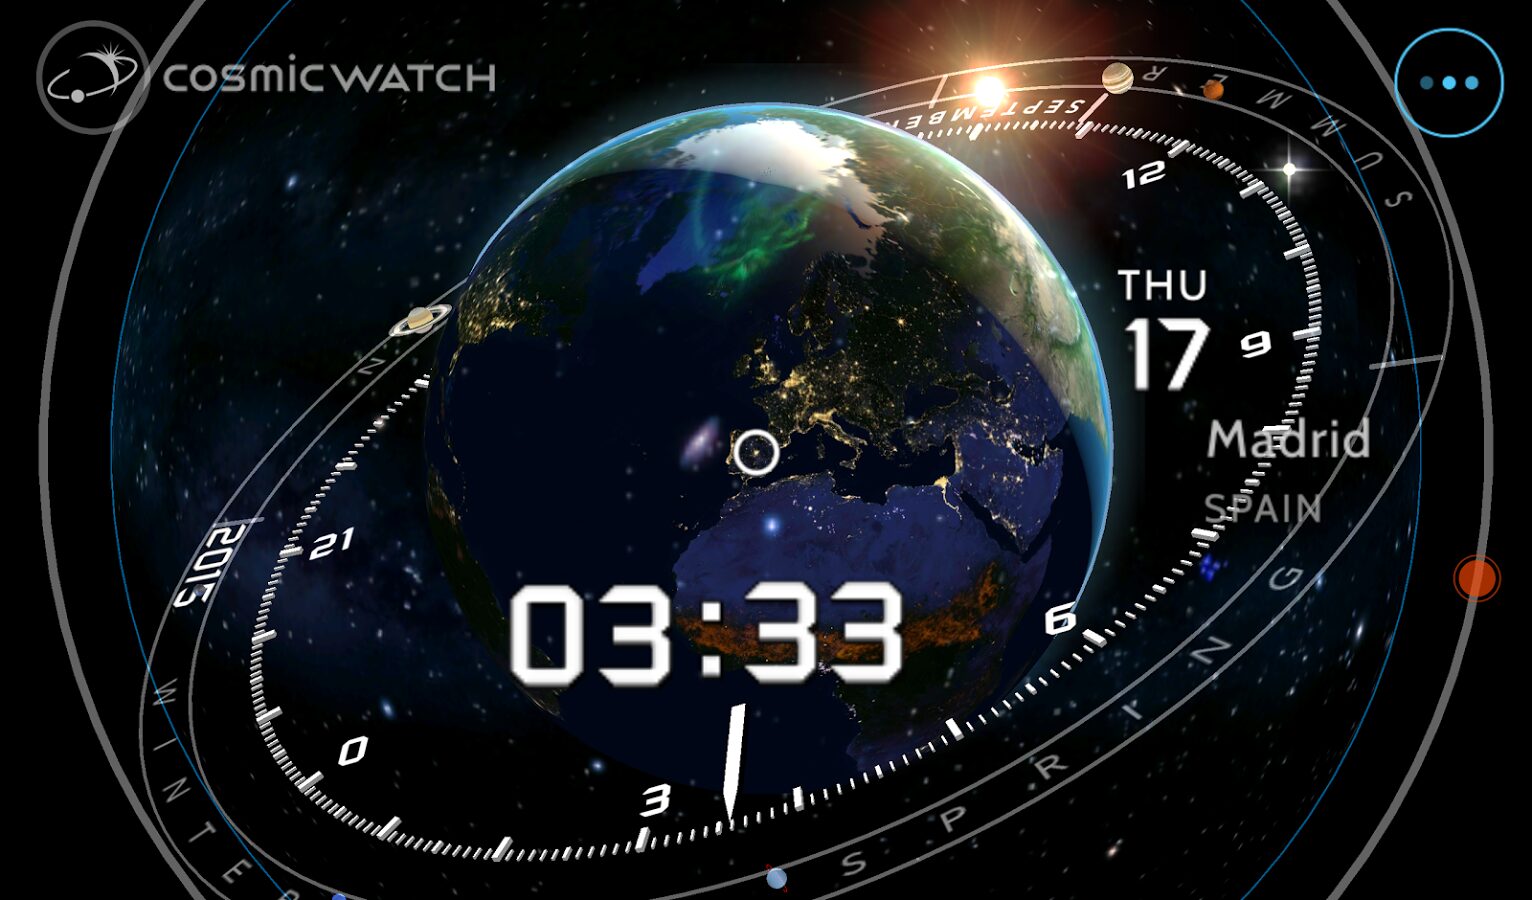 Cosmic-Watch : une superbe « montre » cosmique sur Android Applications